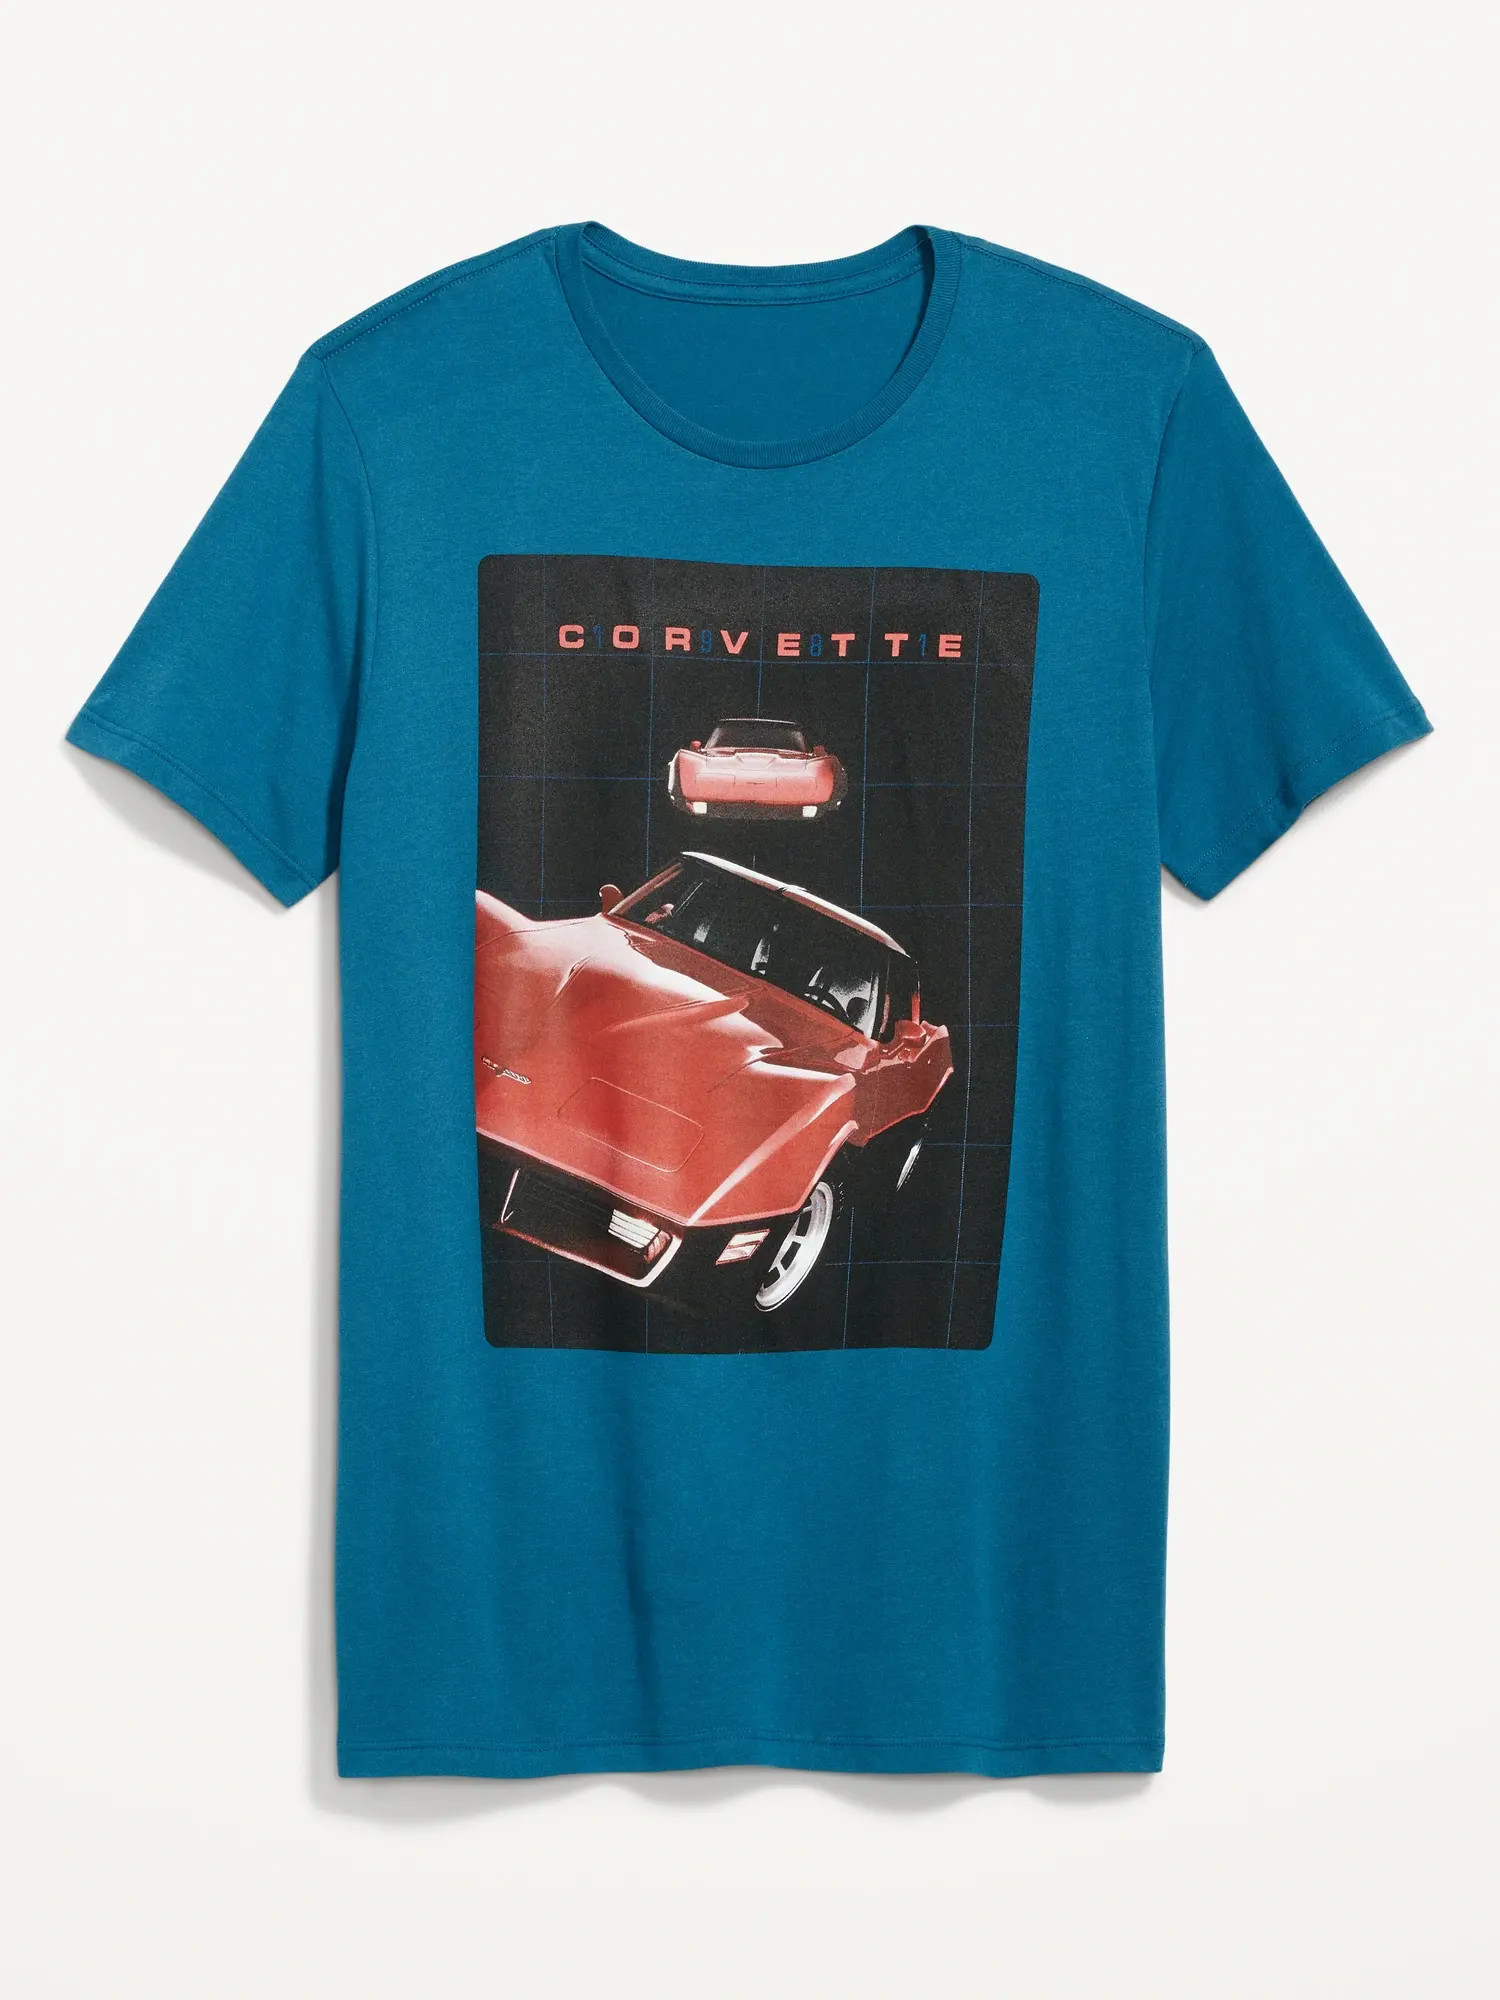 Old Navy Chevrolet™ Corvette™ Gender-Neutral T-Shirt for Adults blue. 1